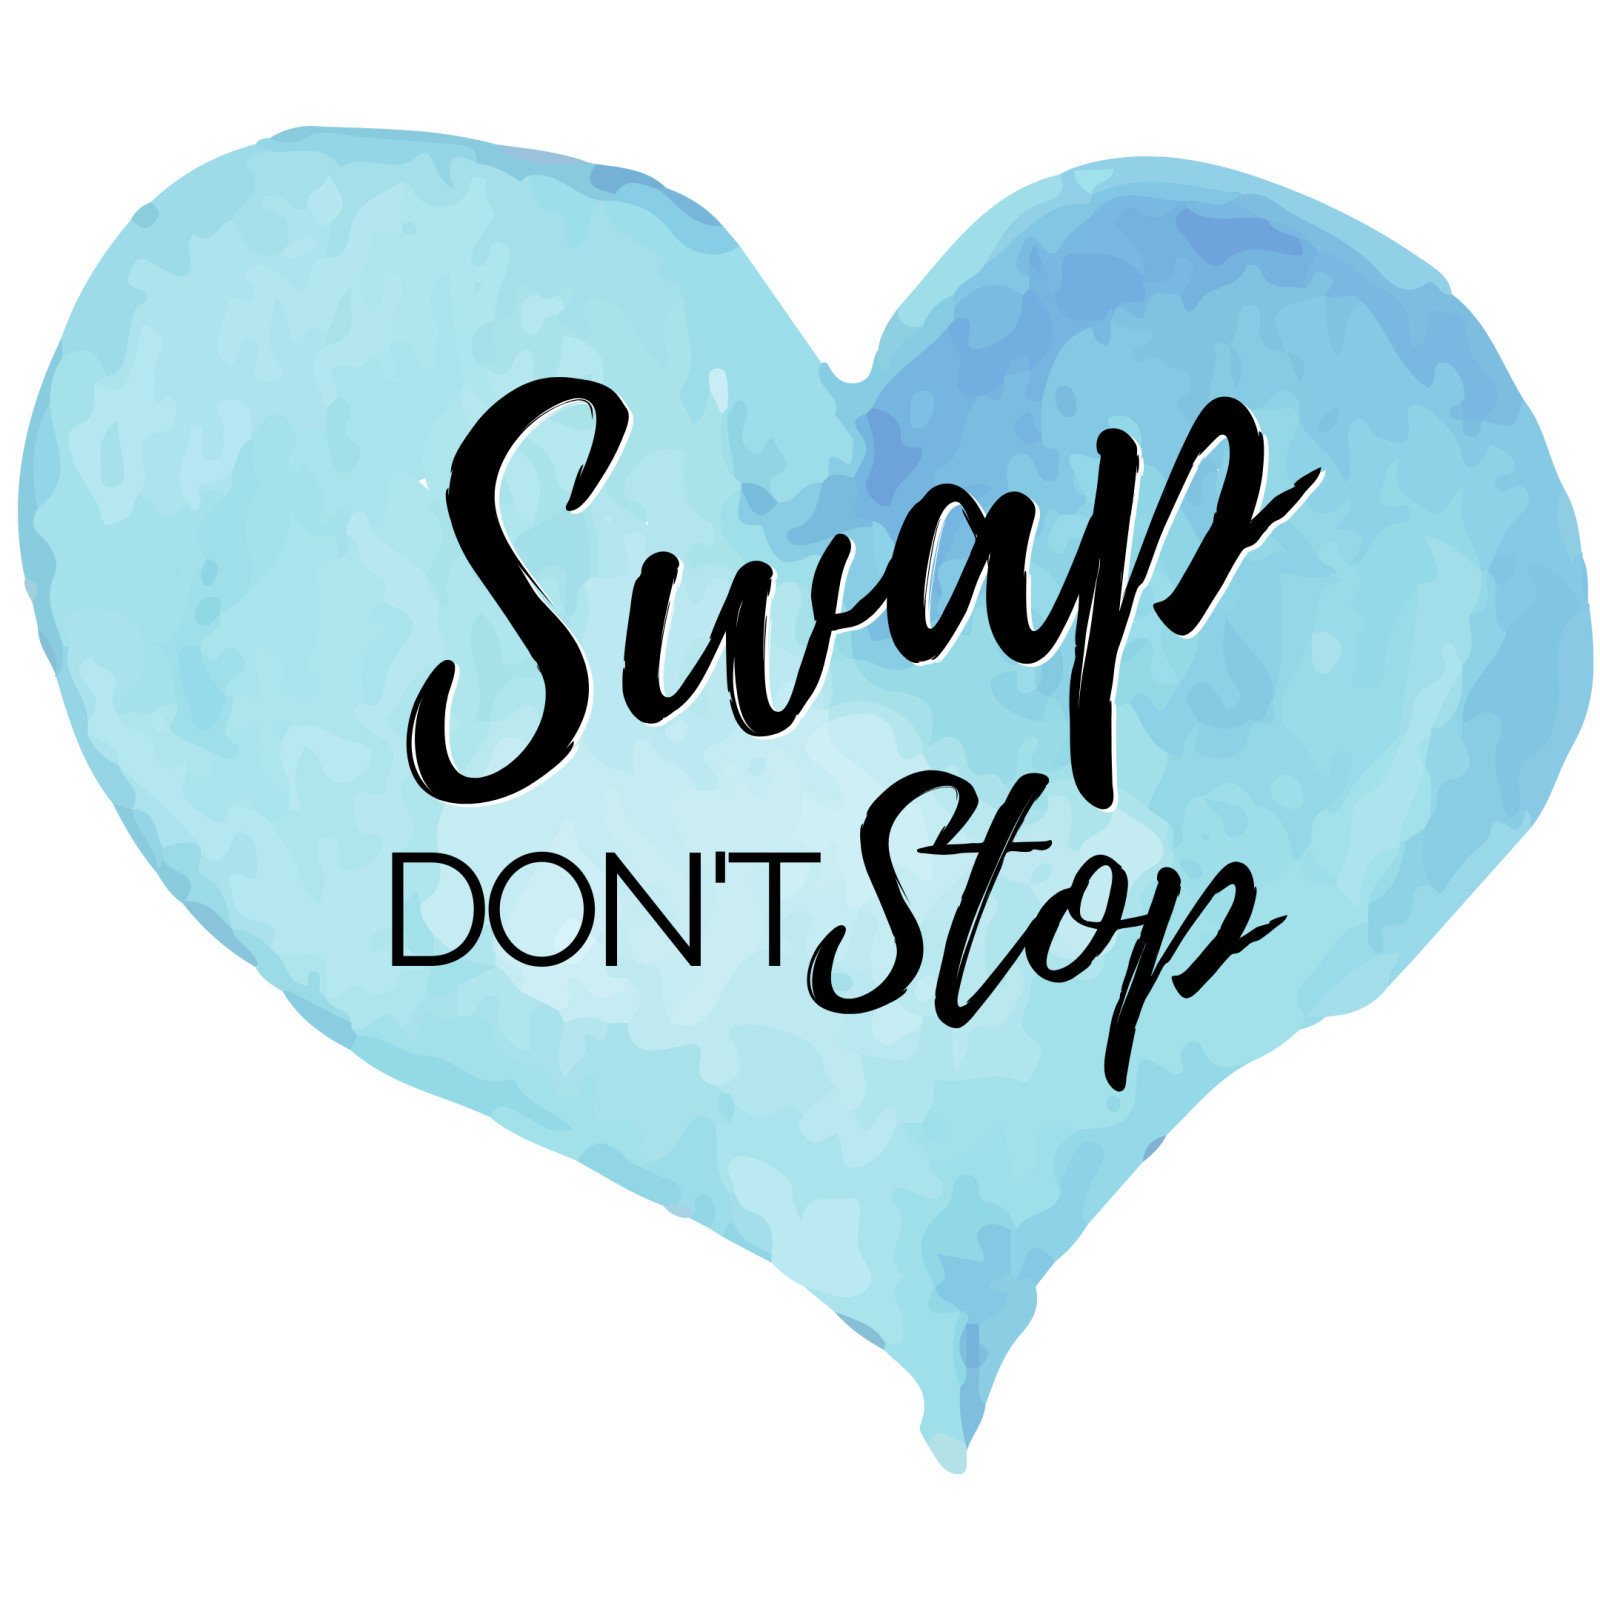 Swap Don't Stop!